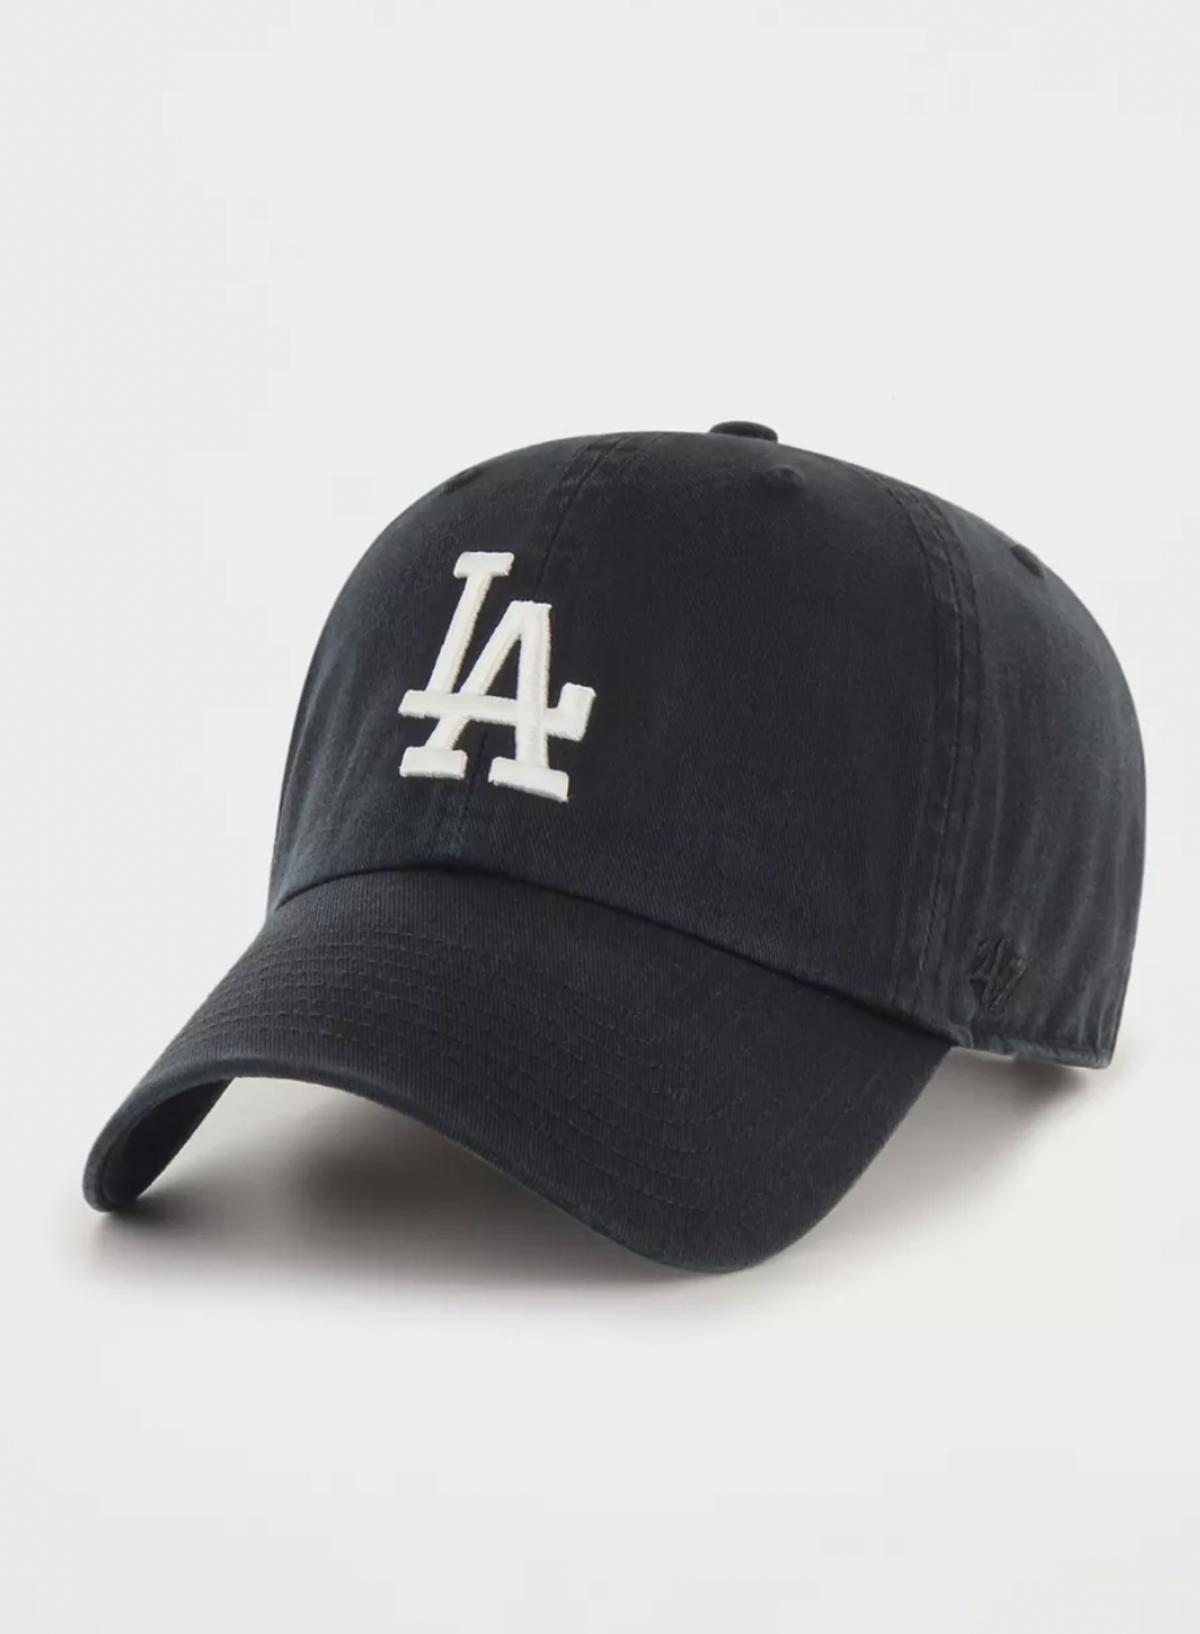 Los Angeles Dodgers Baseball Hat